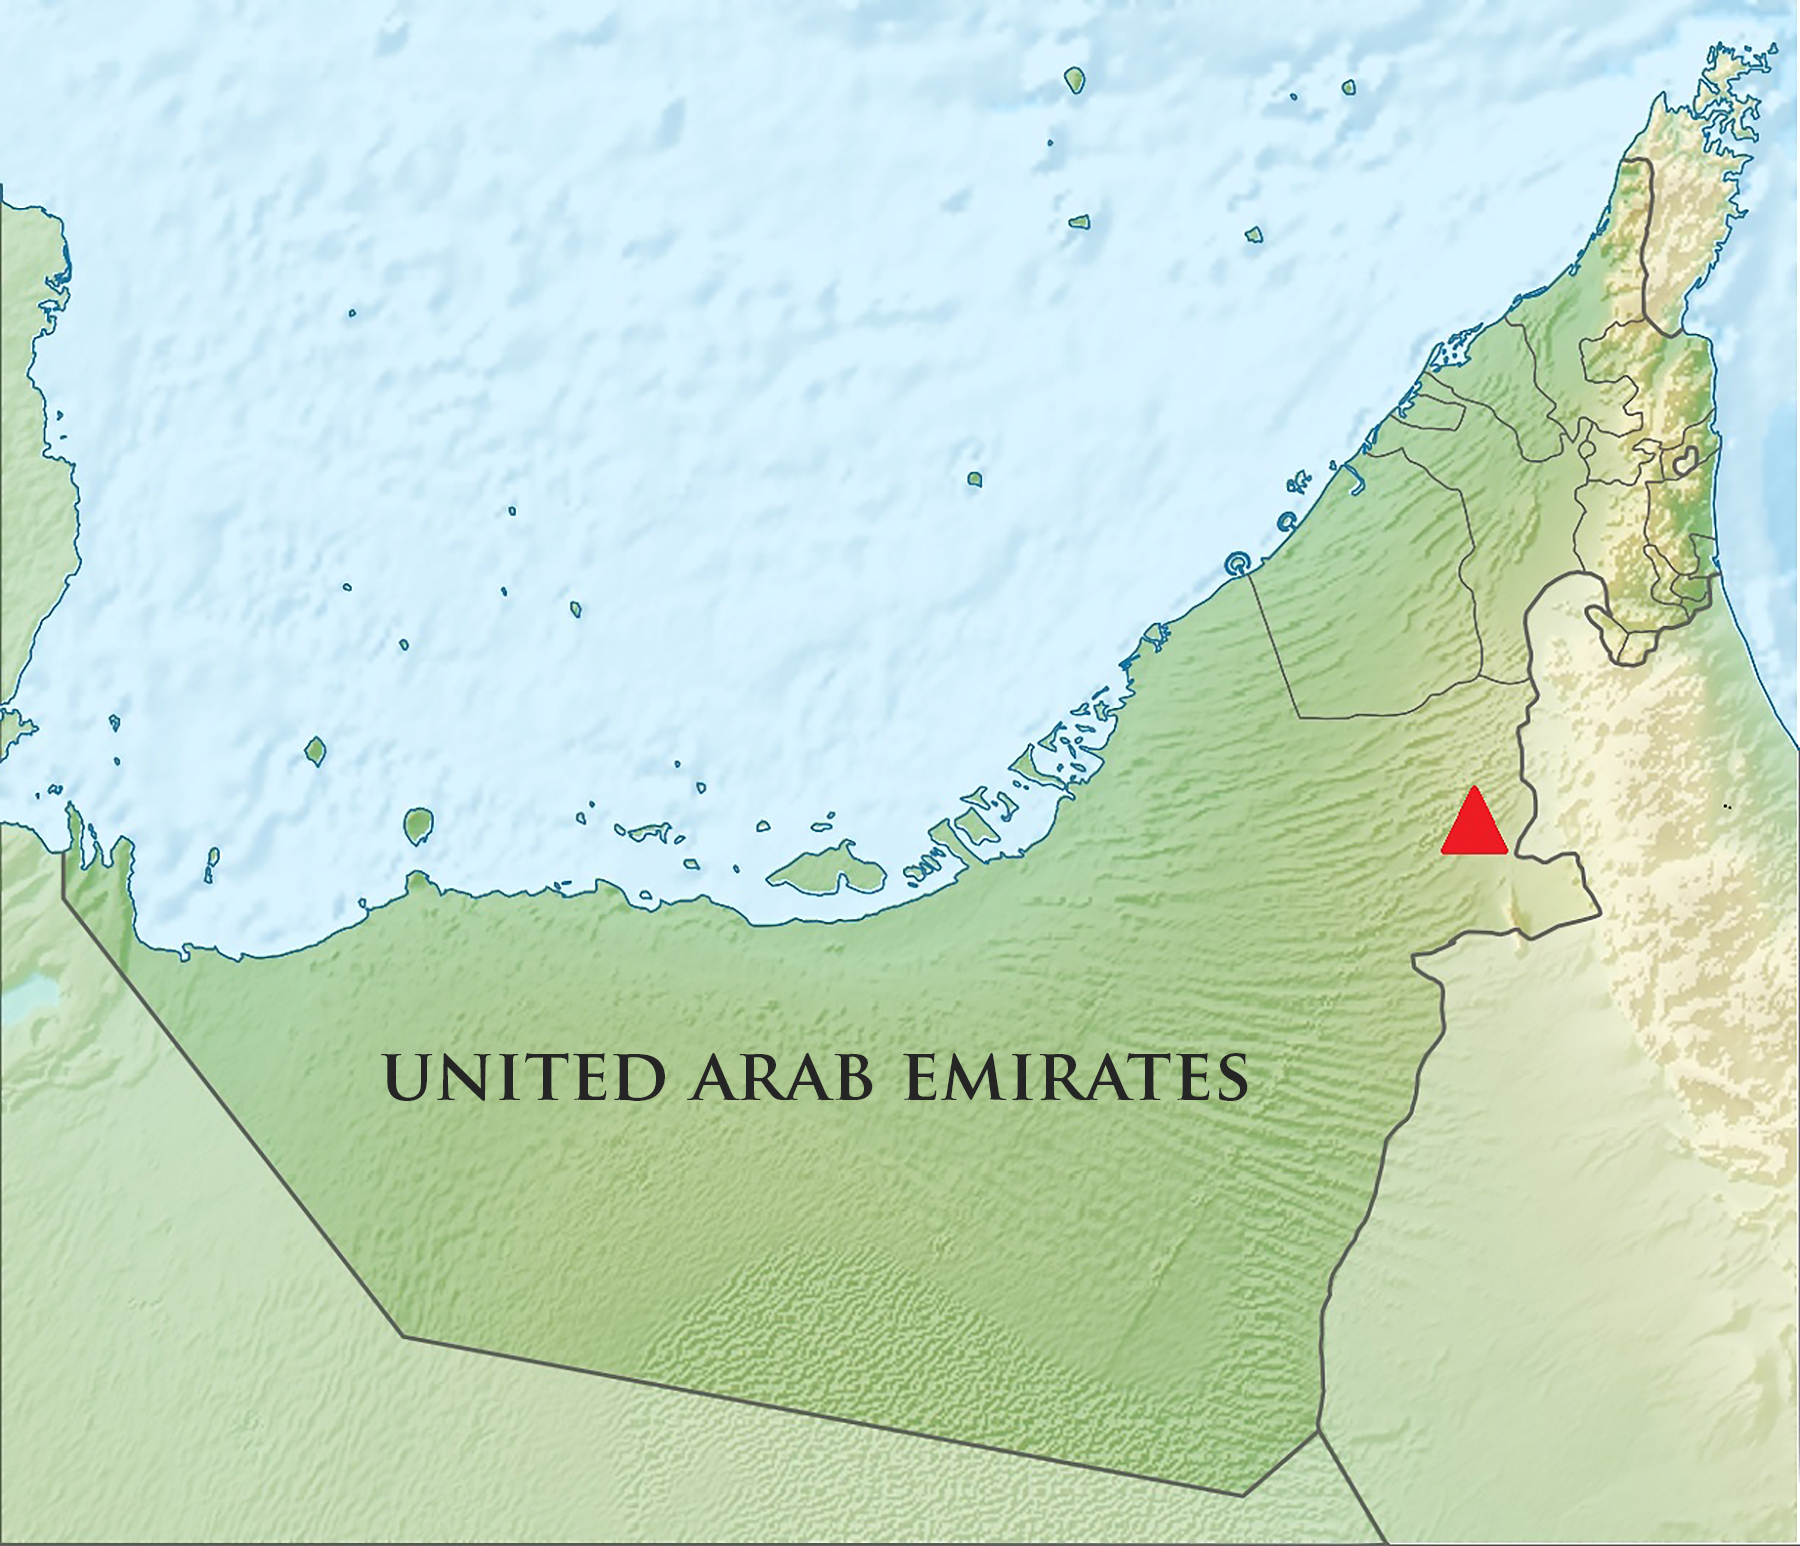 Location of the Qarn bint Sa’ud escarpment